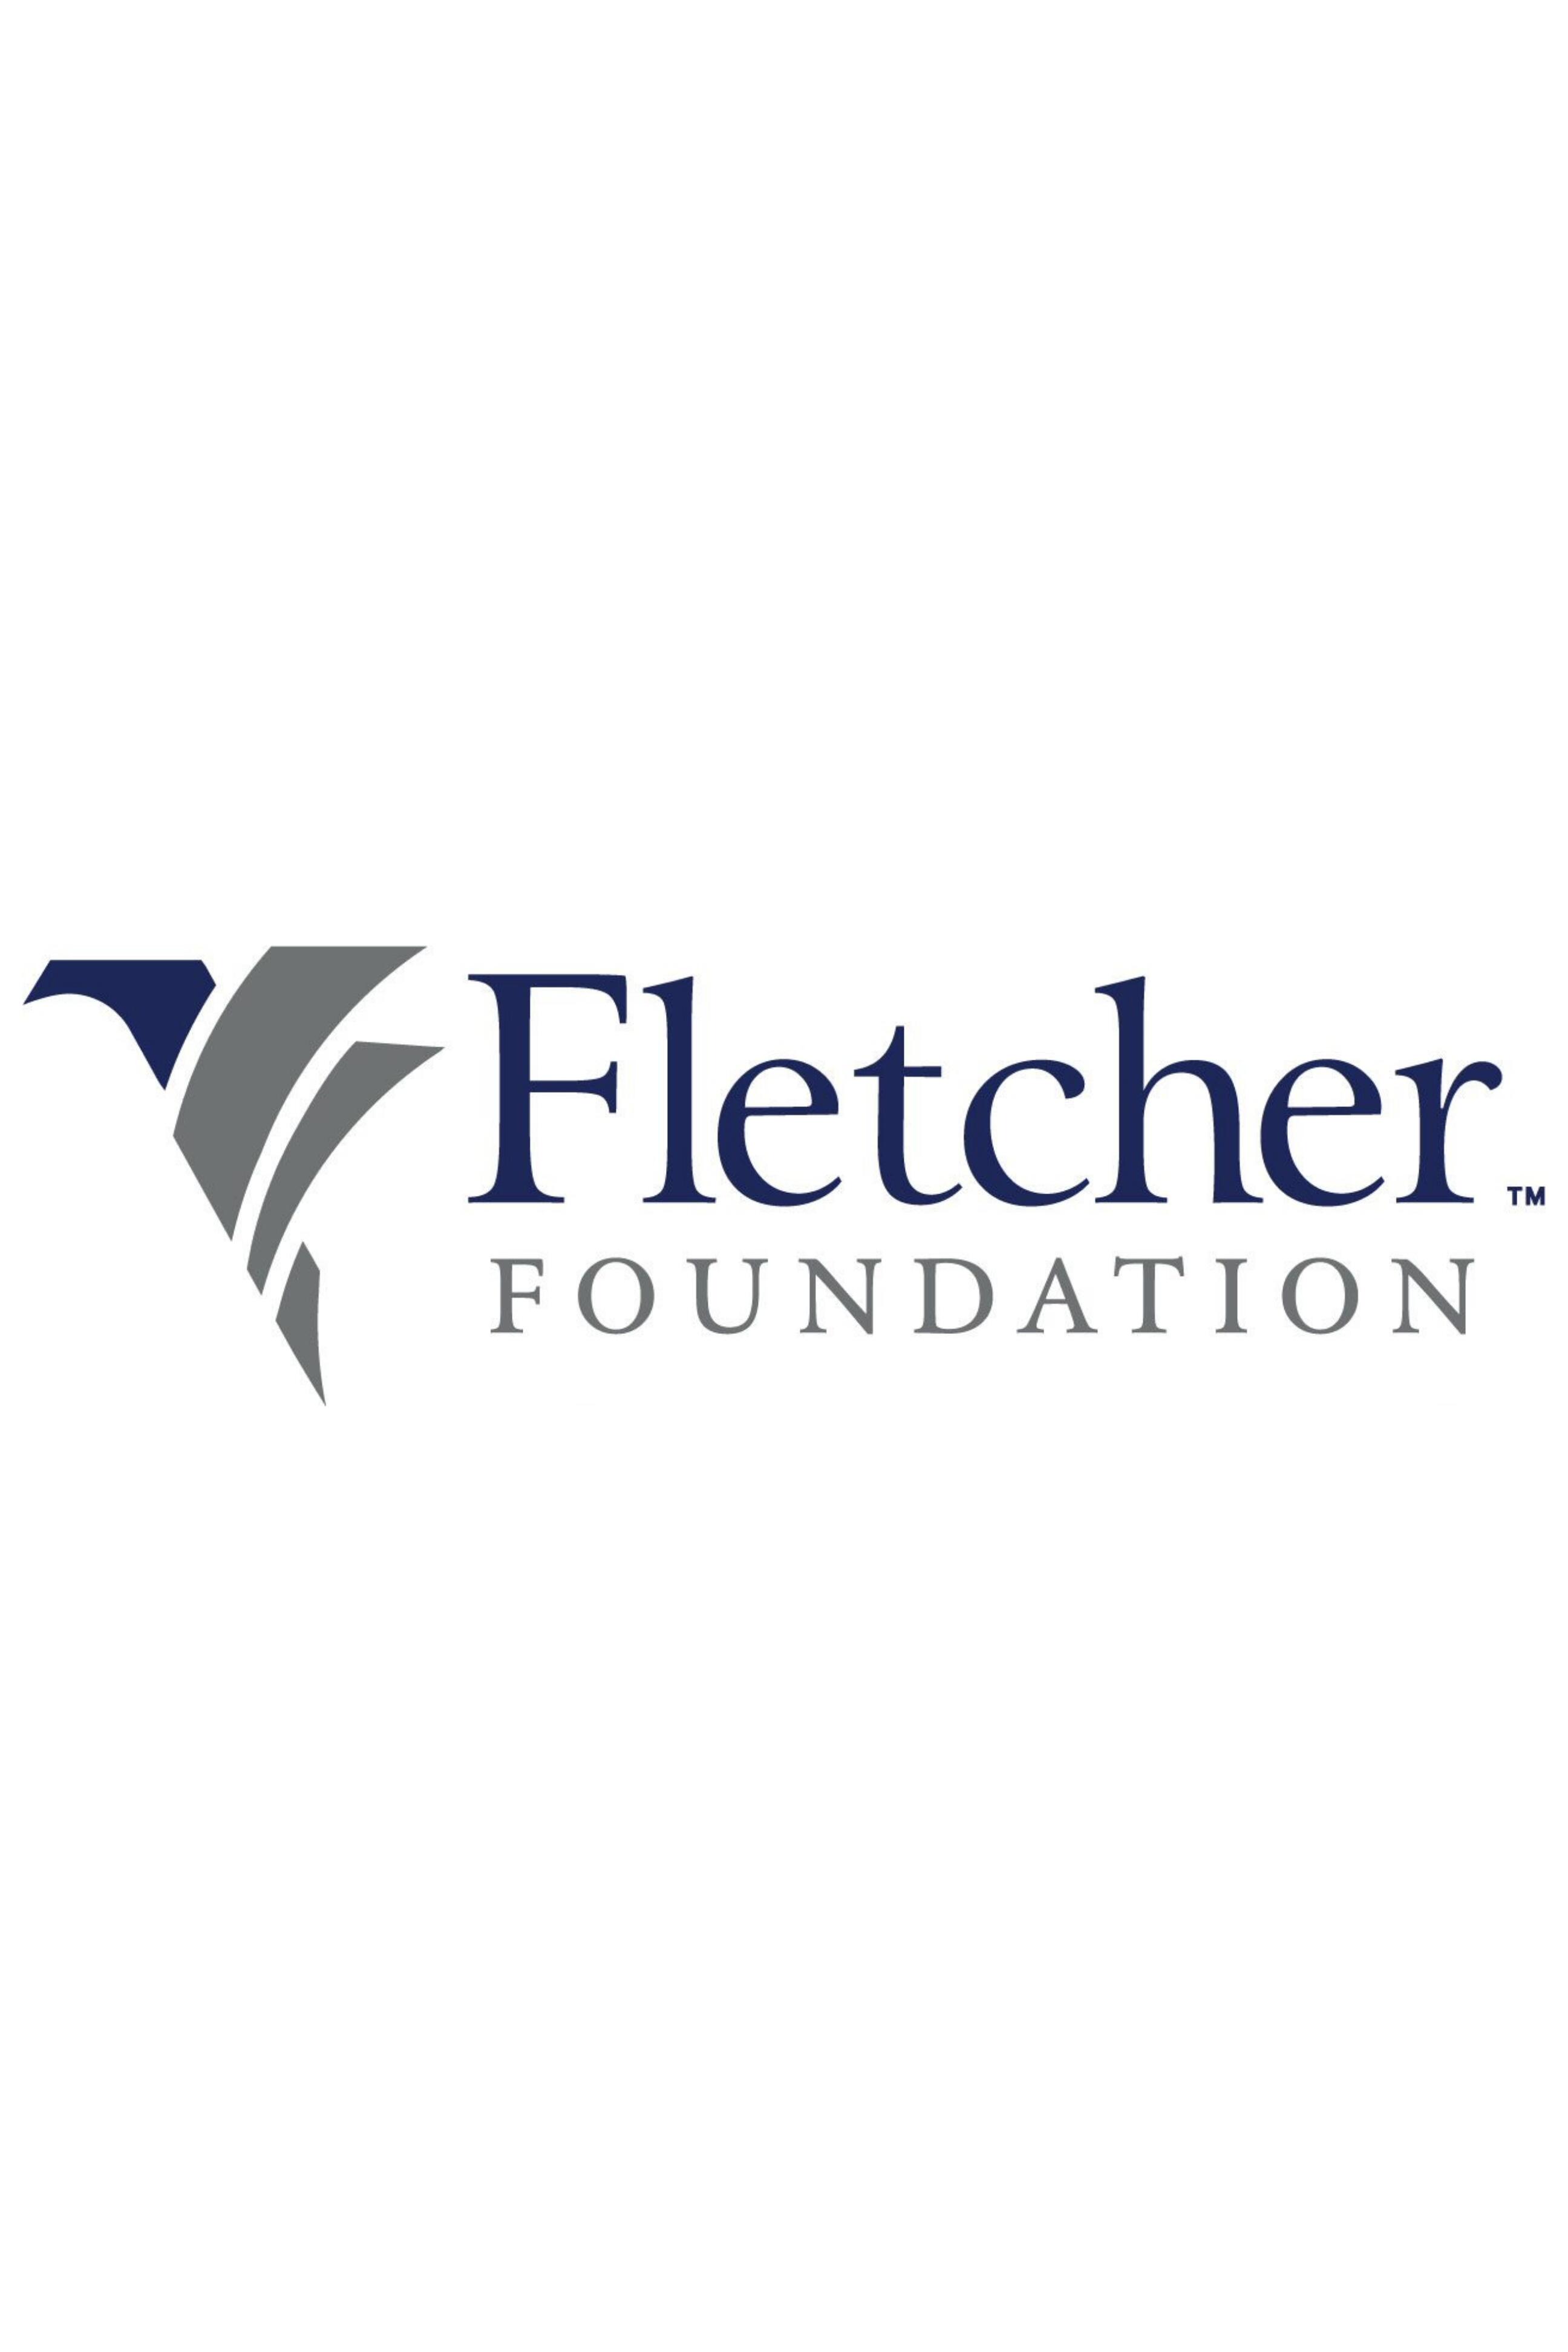 Fletcher foundation place holder